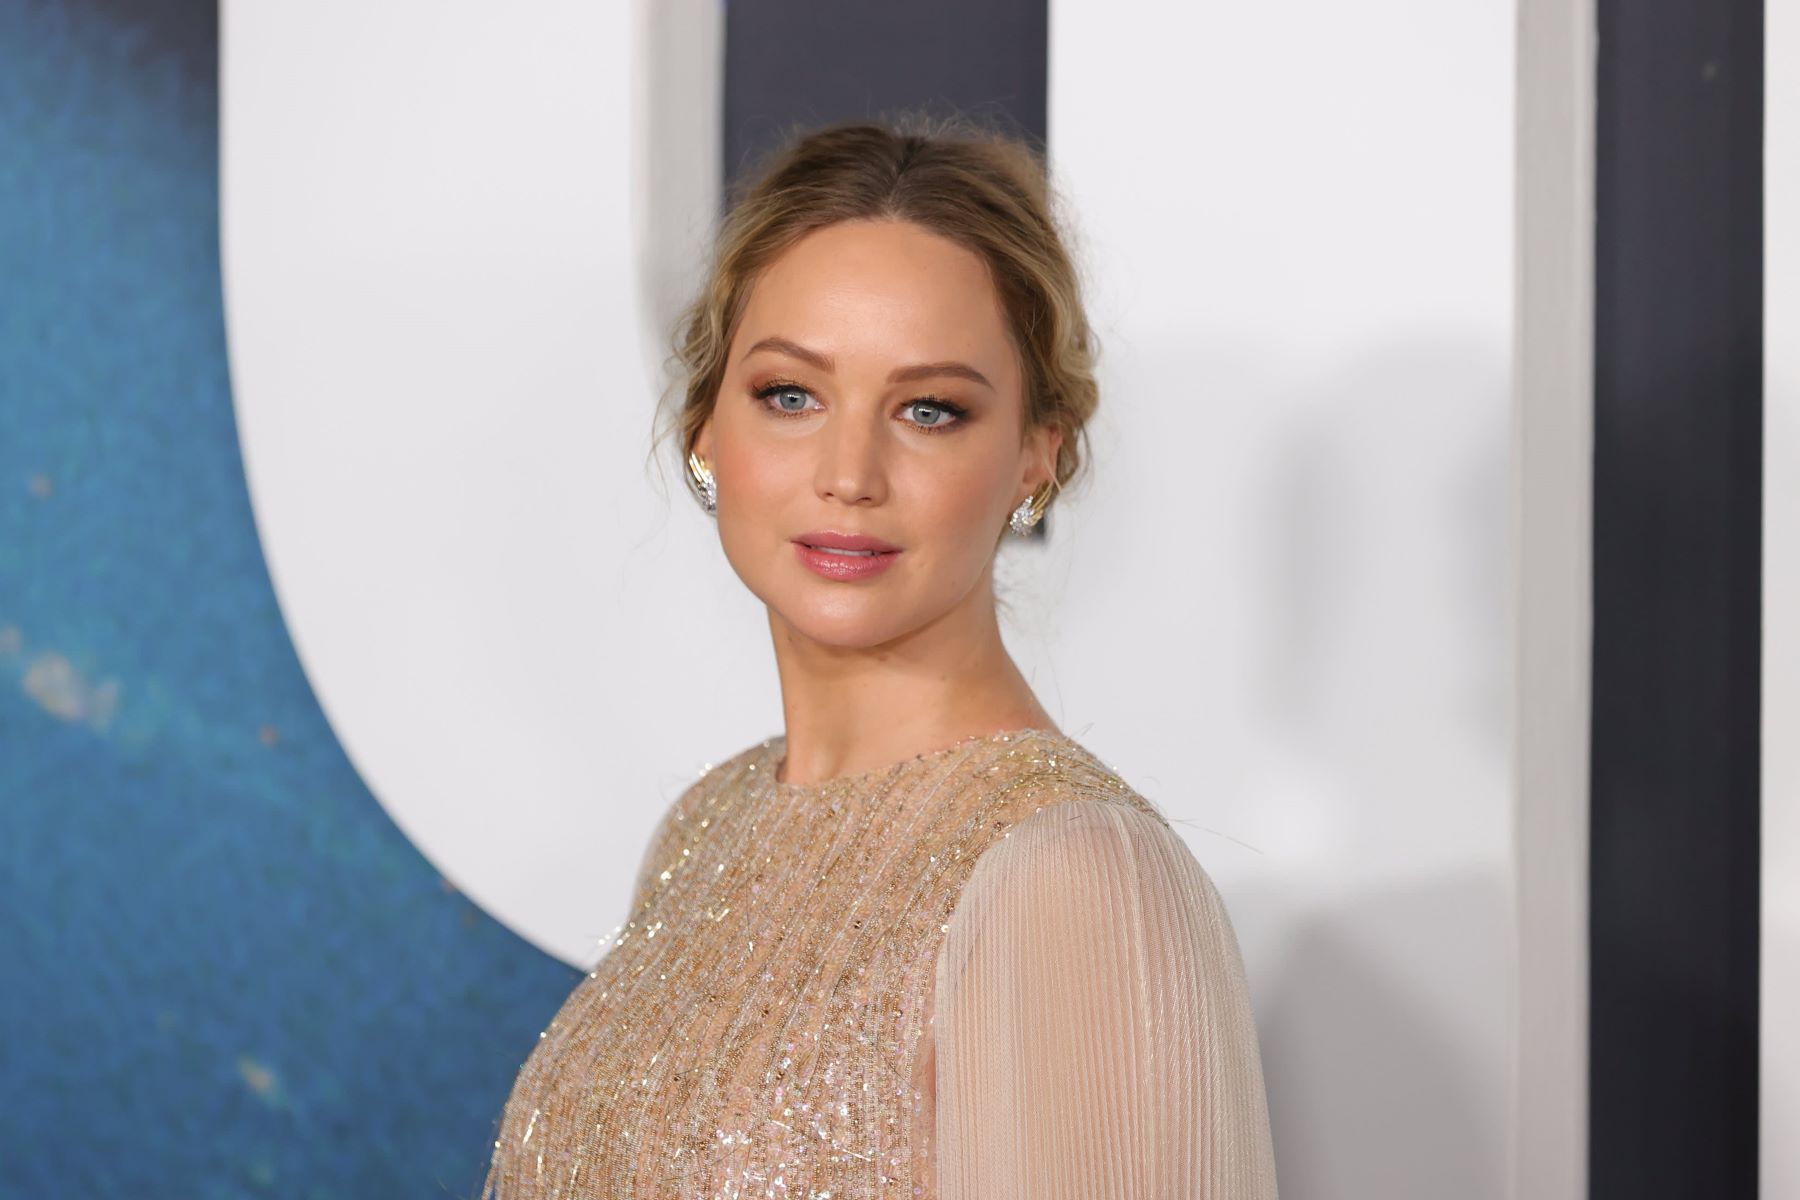 Jennifer Lawrence's Shocking Reaction To The Harvey Weinstein Scandal